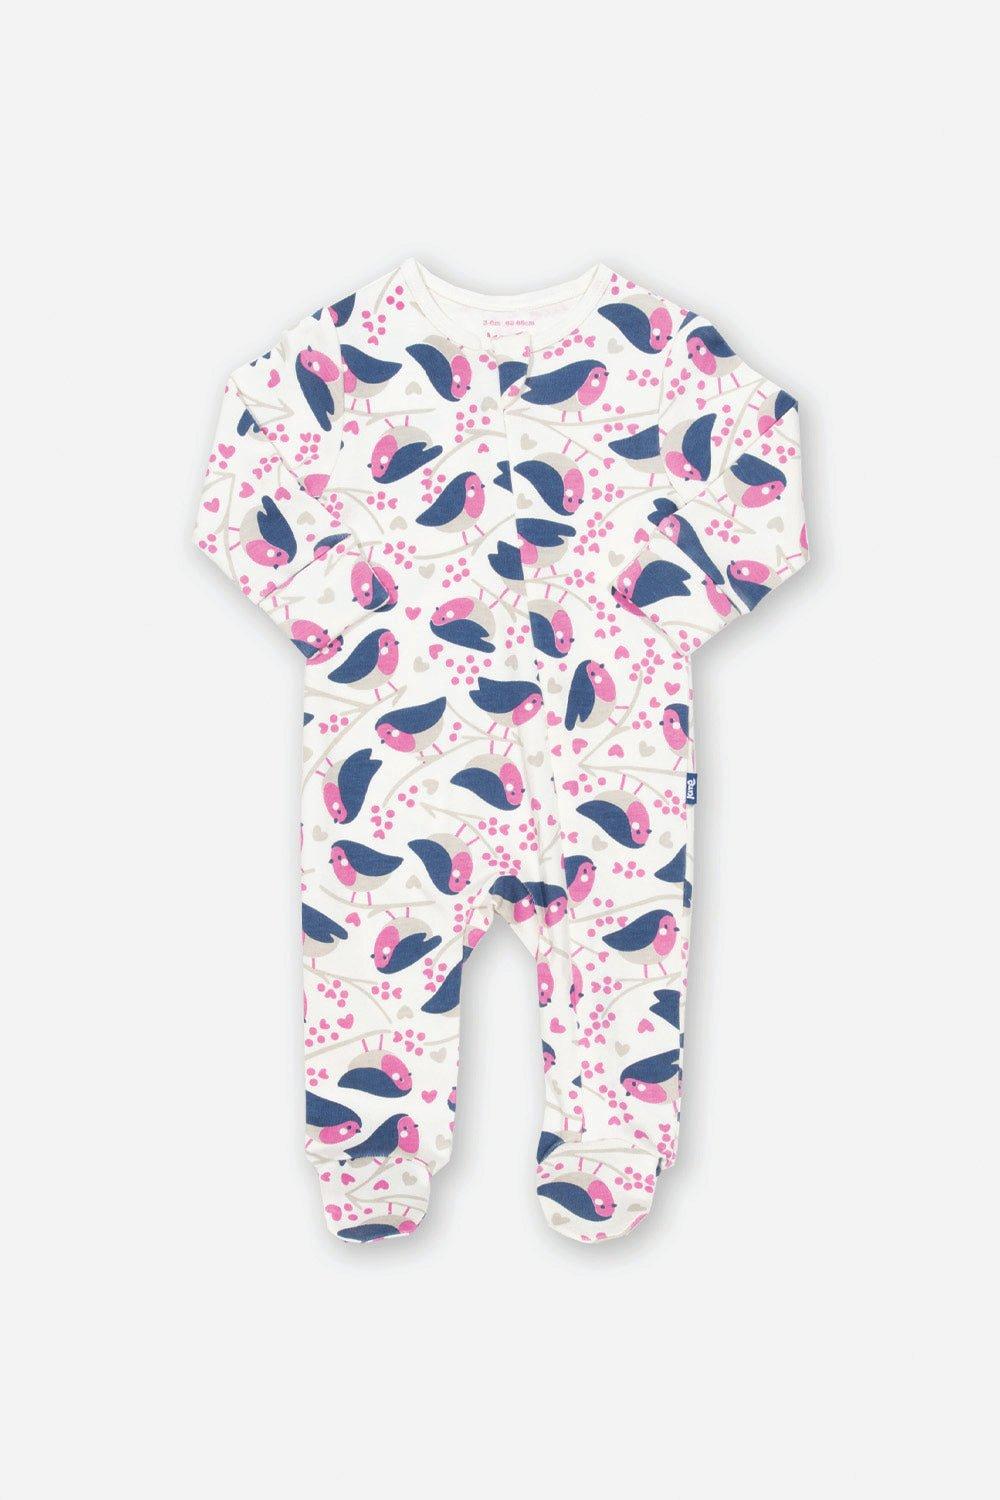 Kite Boy's Girl's Baby Girl Bonnie Robin Sleepsuit|Size: 9-12 m|pink